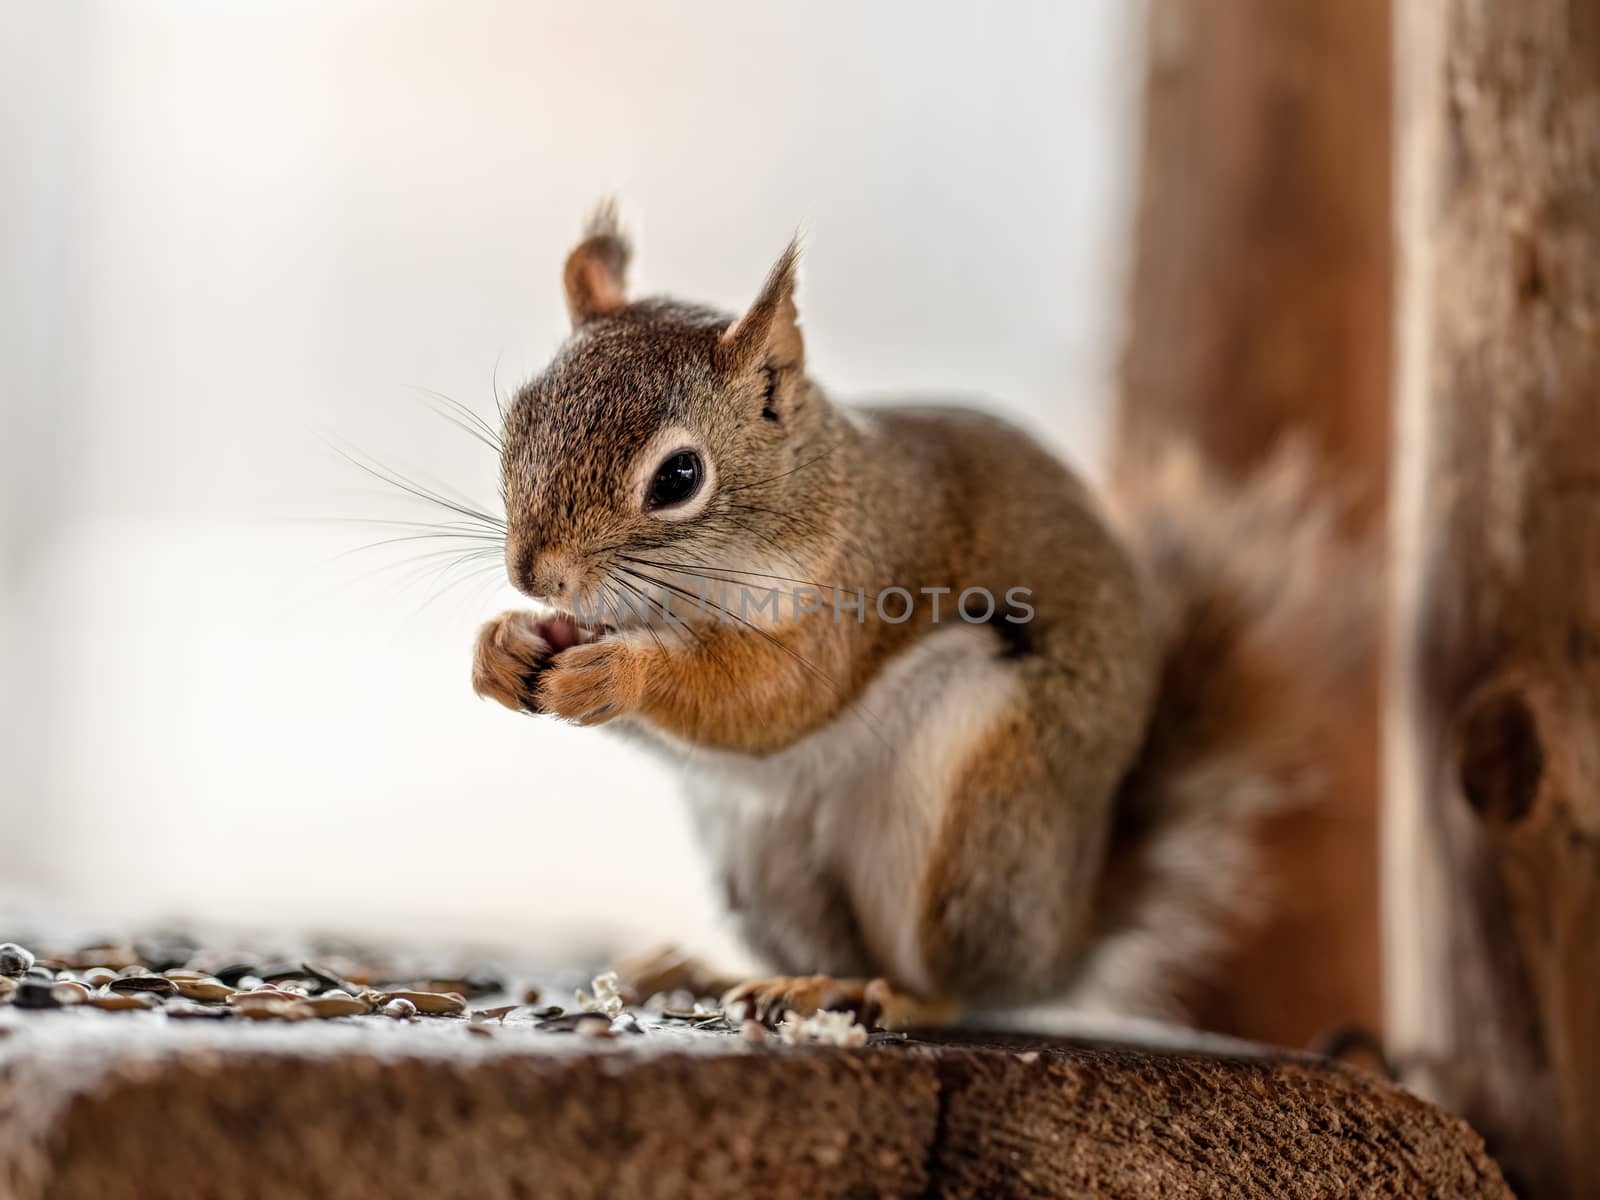 American red squirrel Tamiasciurus hudsonicus eating seeds, closeup detail.